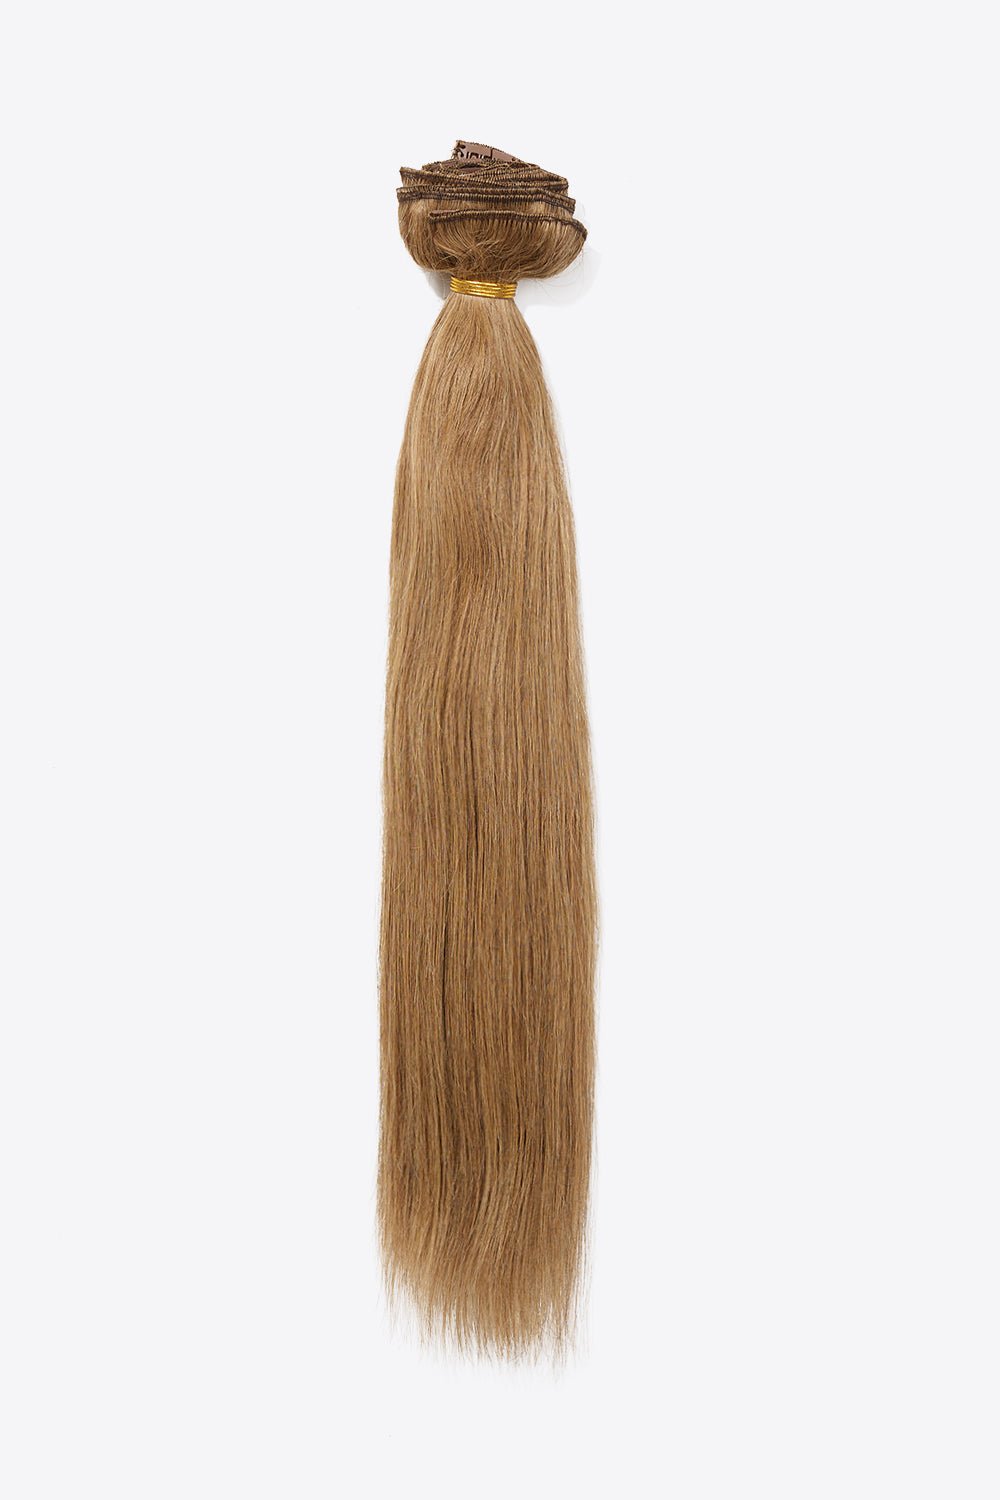 18''140g #10 Natural Straight Clip-in Hair Extensions Human Hair - PINKCOLADA-Beauty-101301658011178